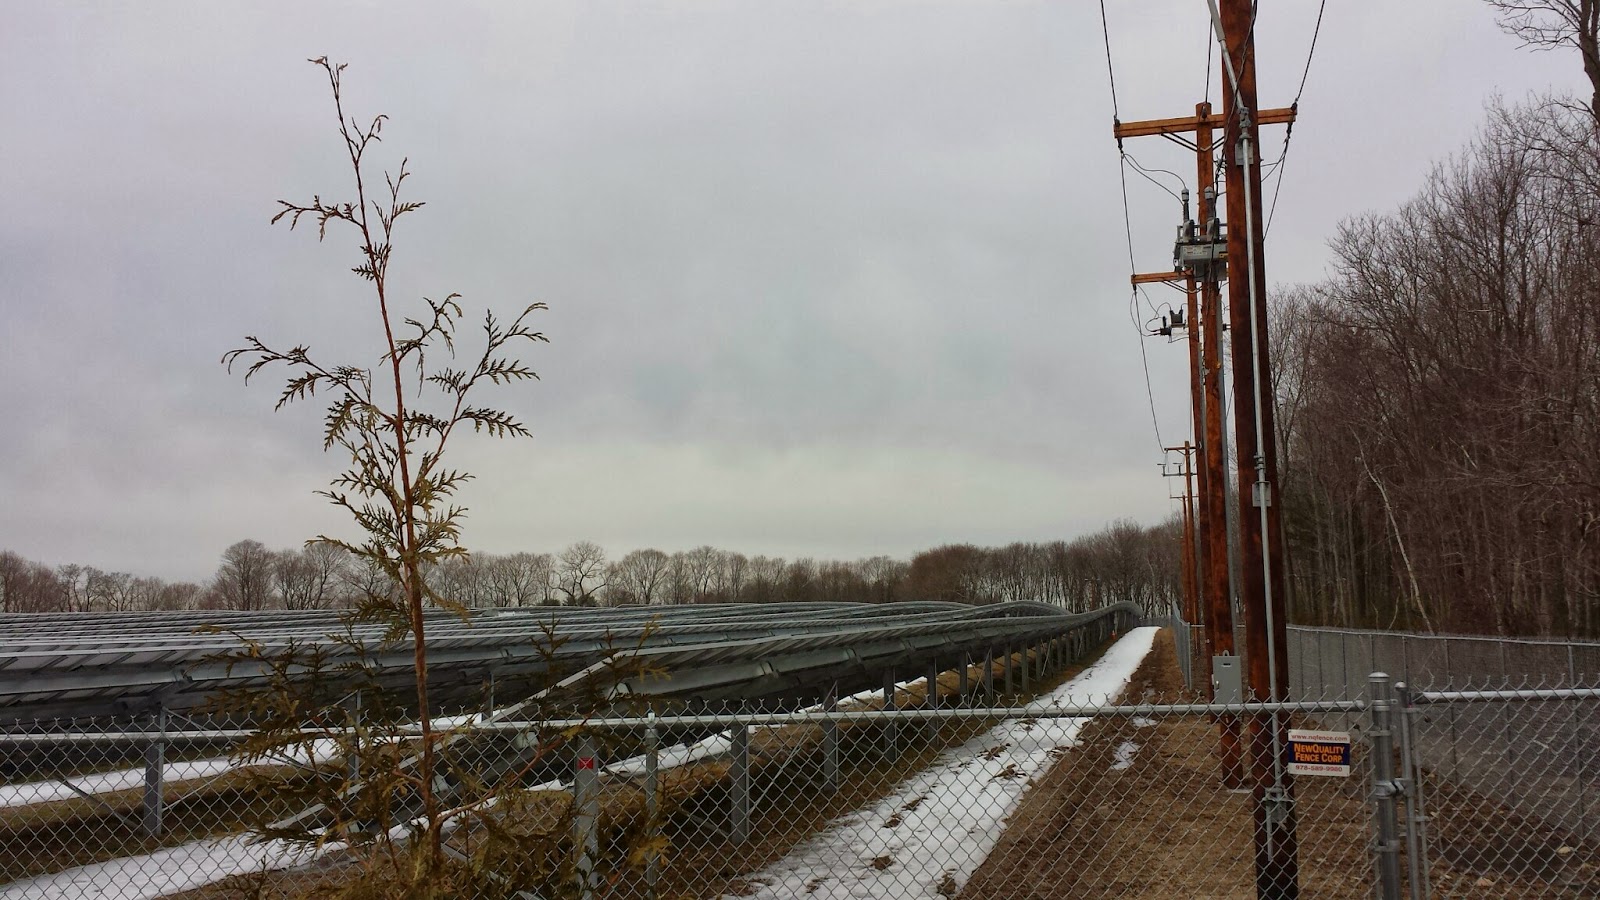 The new poles lined the solar farm